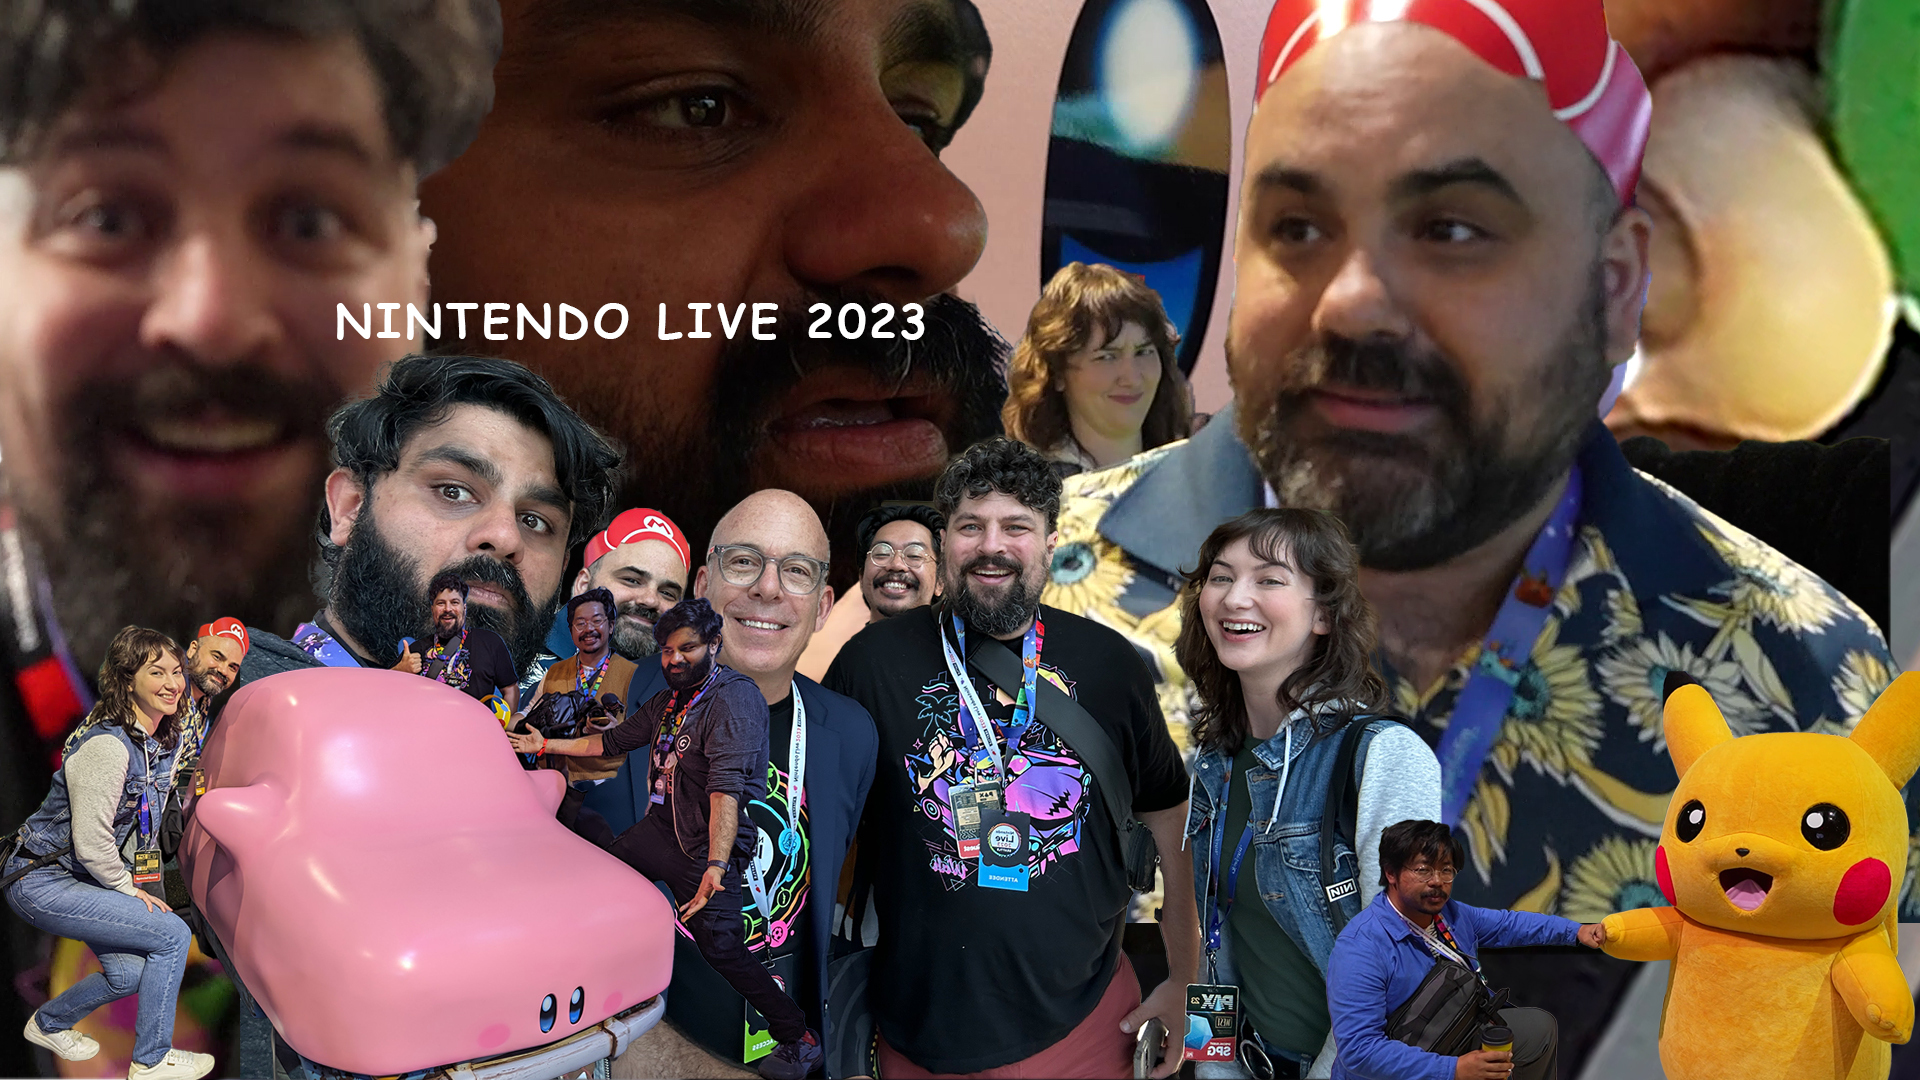 GB at Nintendo Live 2023